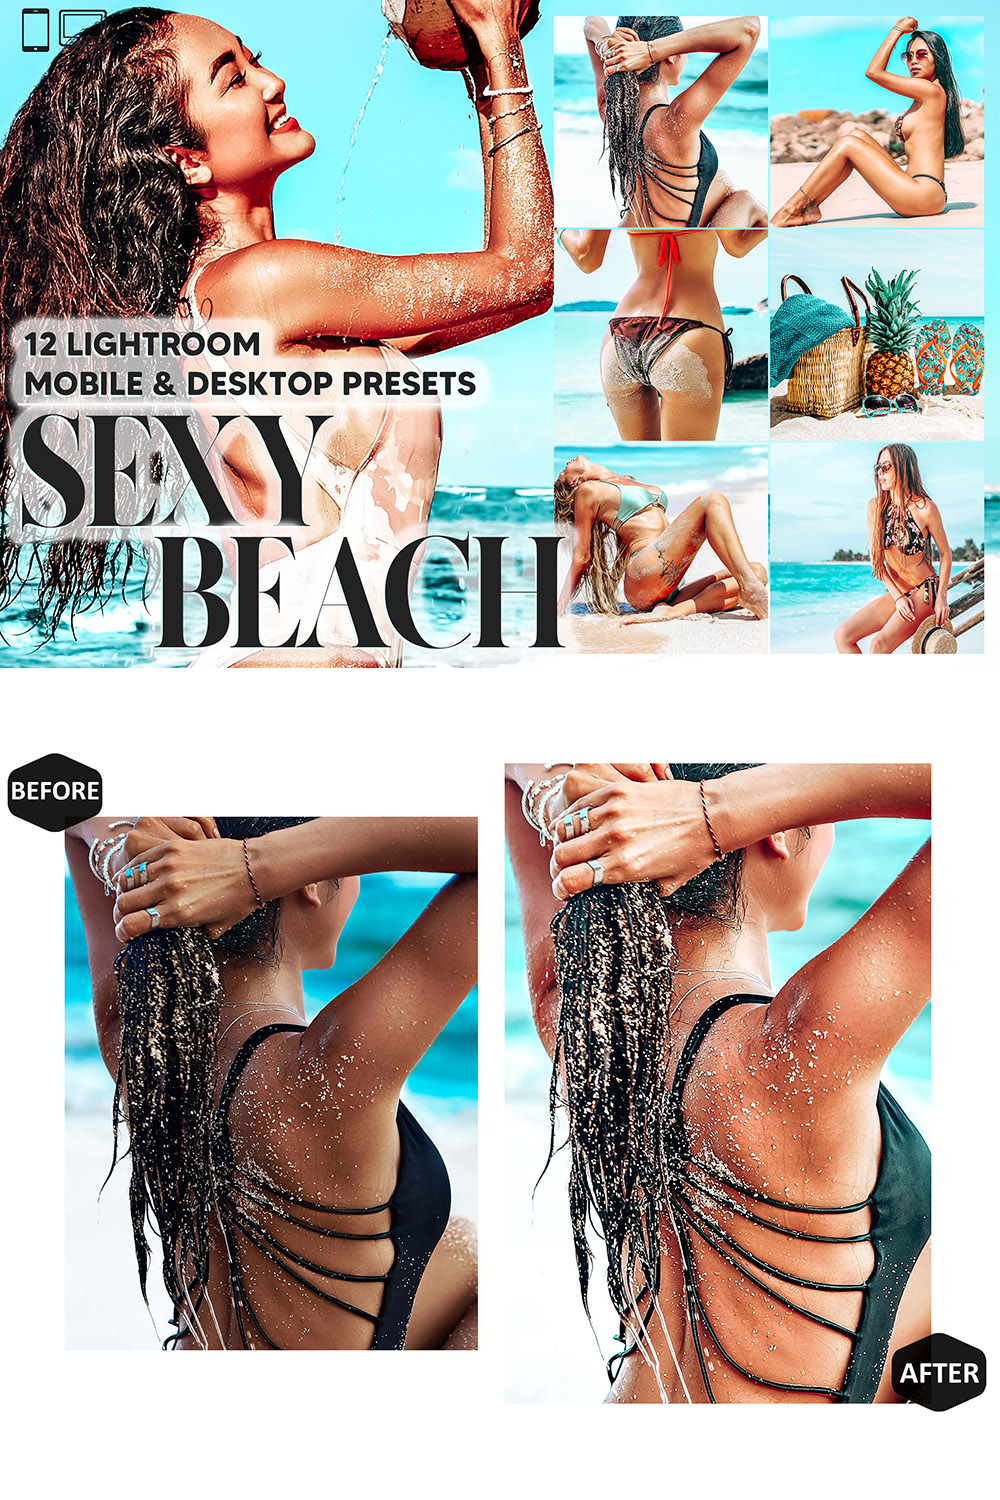 12 Sexy Beach Lightroom Presets, Ocean Mobile Preset, Summer Desktop Lifestyle Portrait Theme For Instagram, LR Filter DNG Maldive Turquoise pinterest preview image.